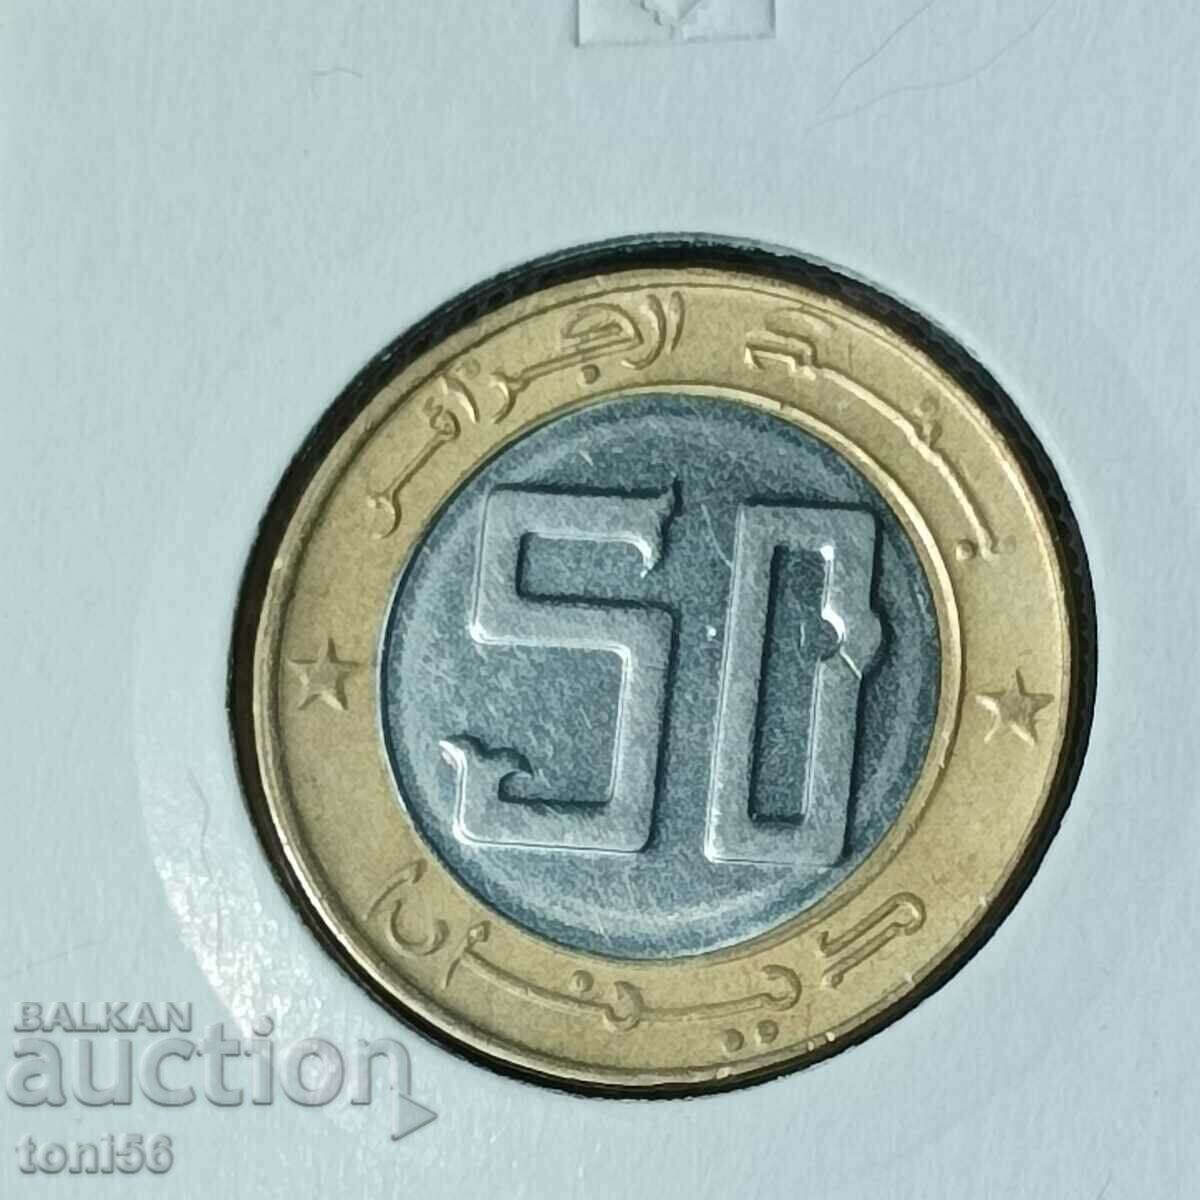 Algeria 50 dinars 1992